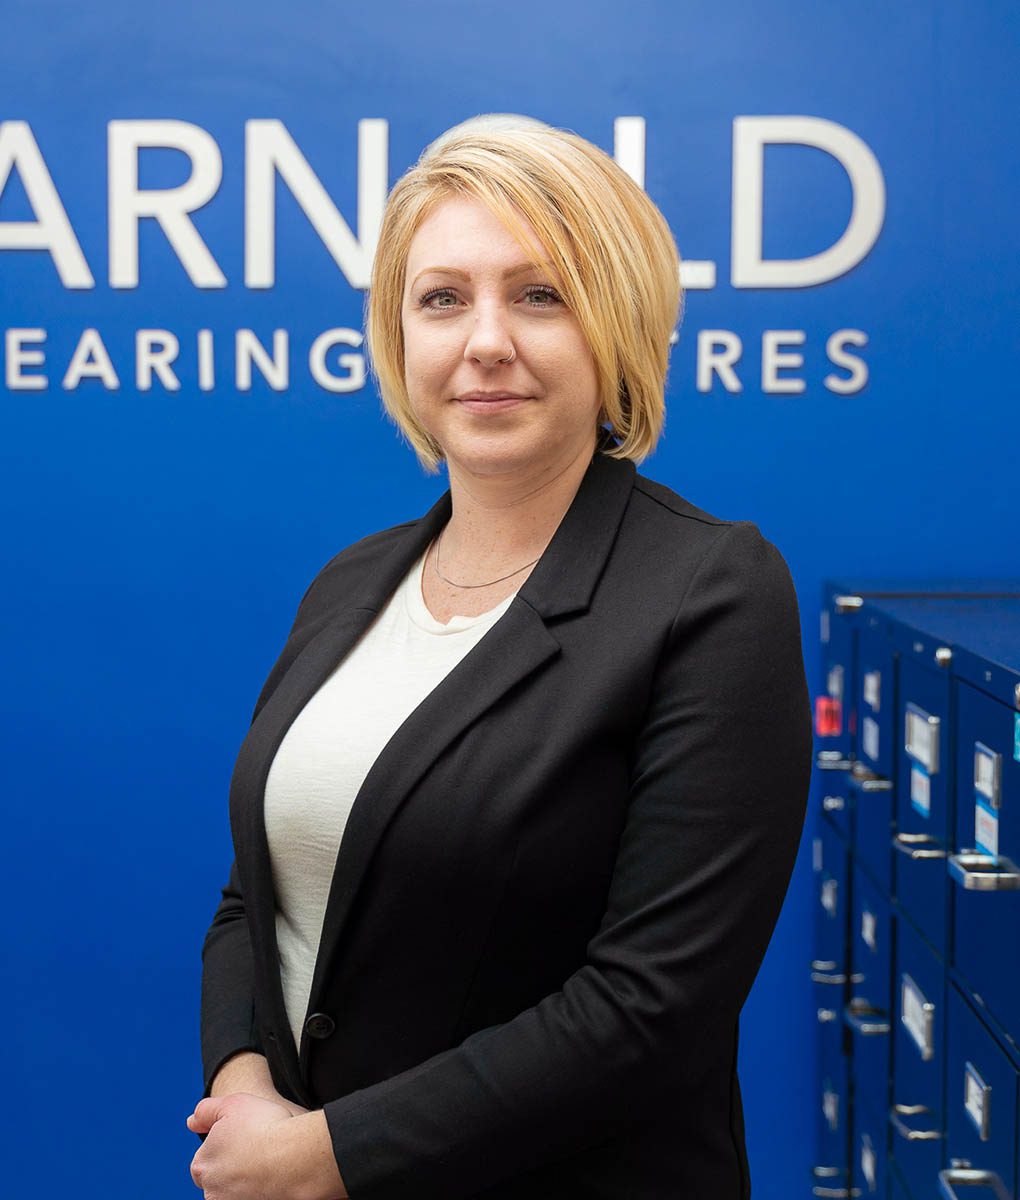 Katalin Szasz-Kelsh, Hearing Care Coordinator at Arnold Hearing Centres